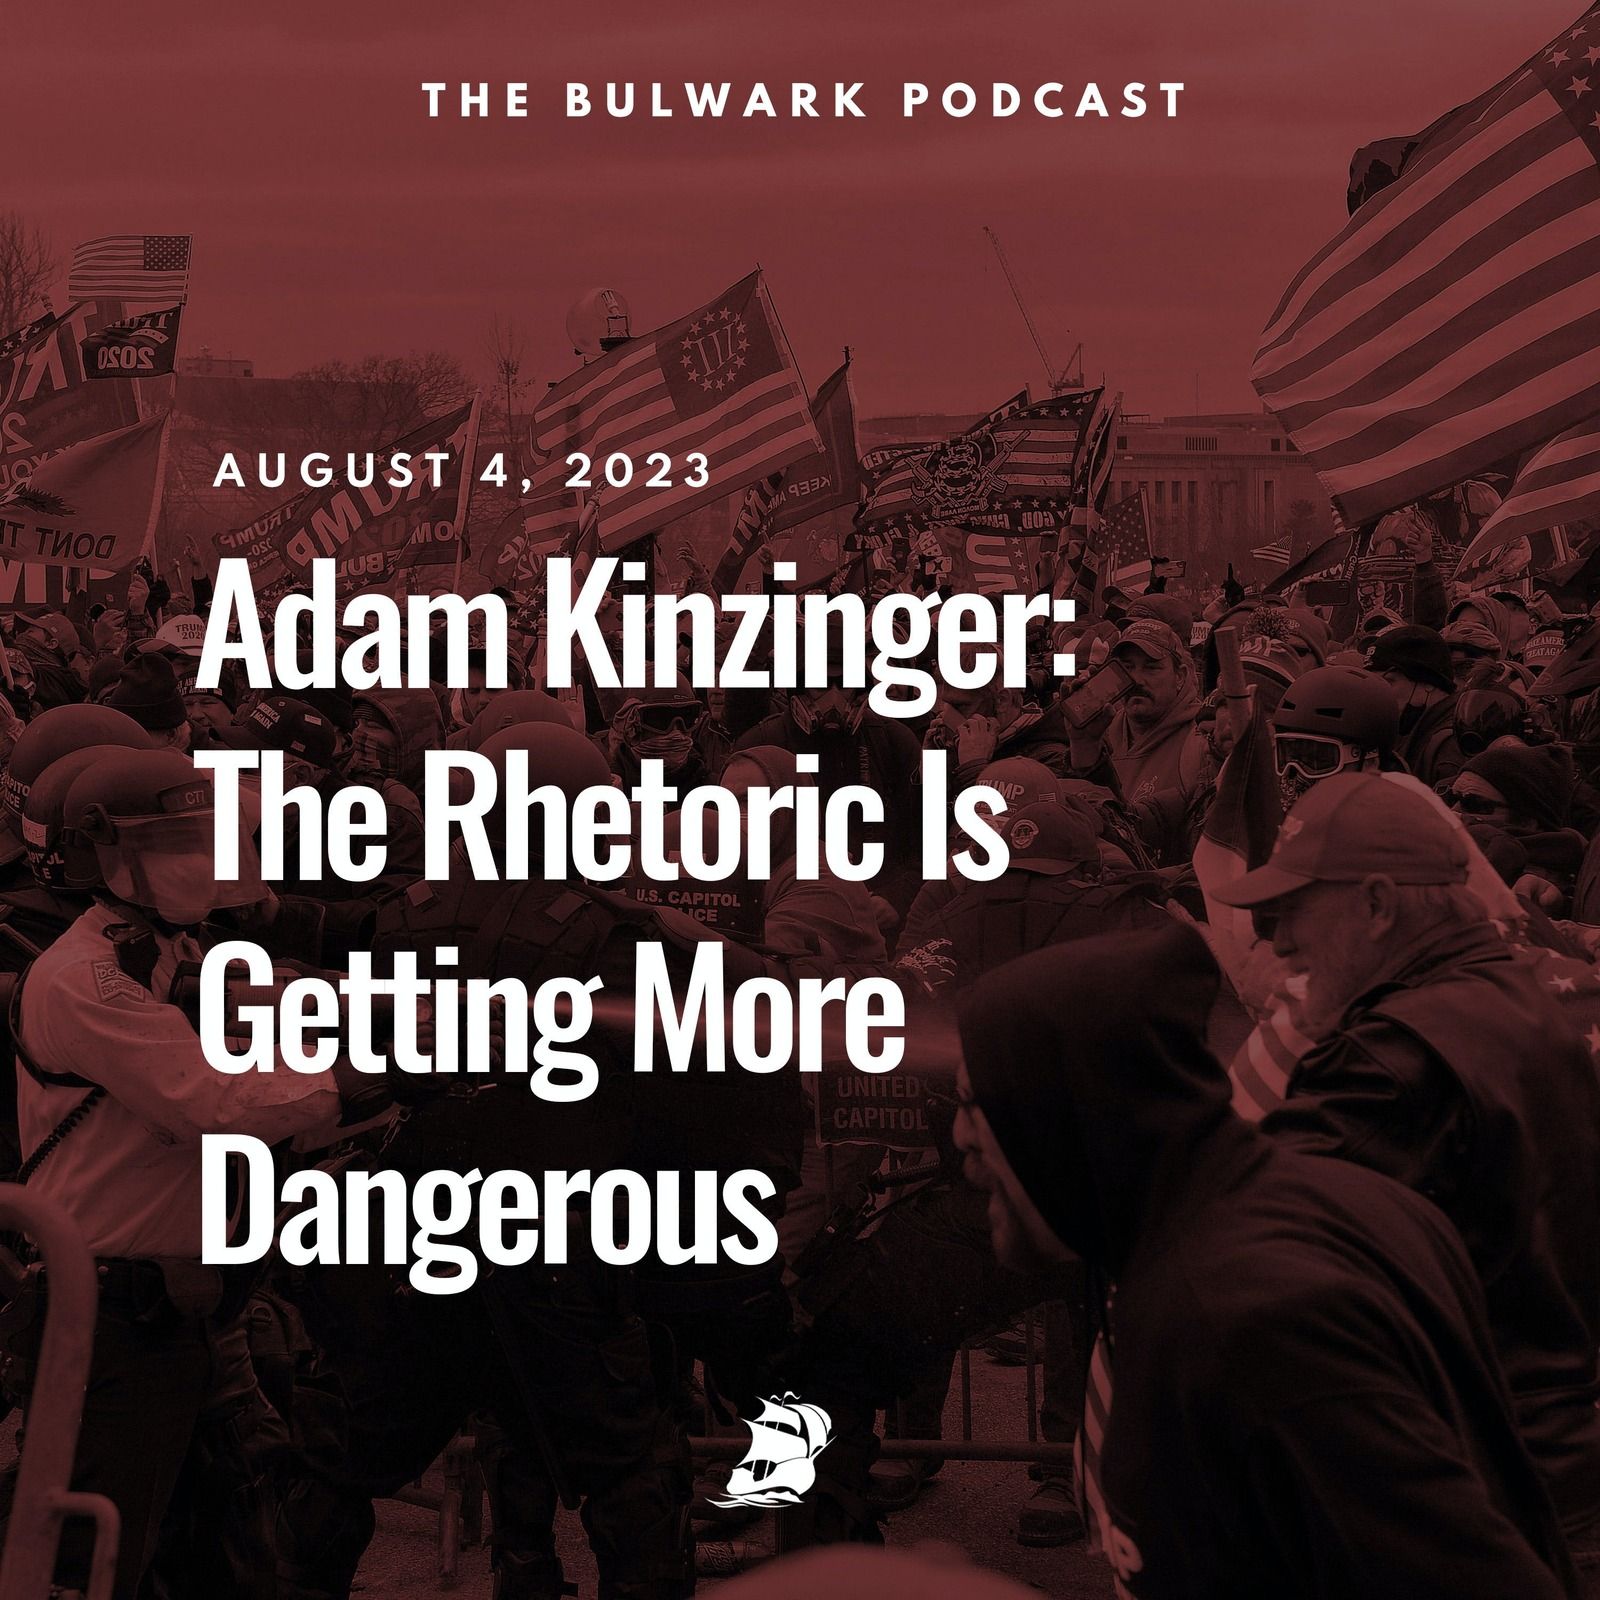 Adam Kinzinger: The Rhetoric Is Getting More Dangerous by The Bulwark Podcast